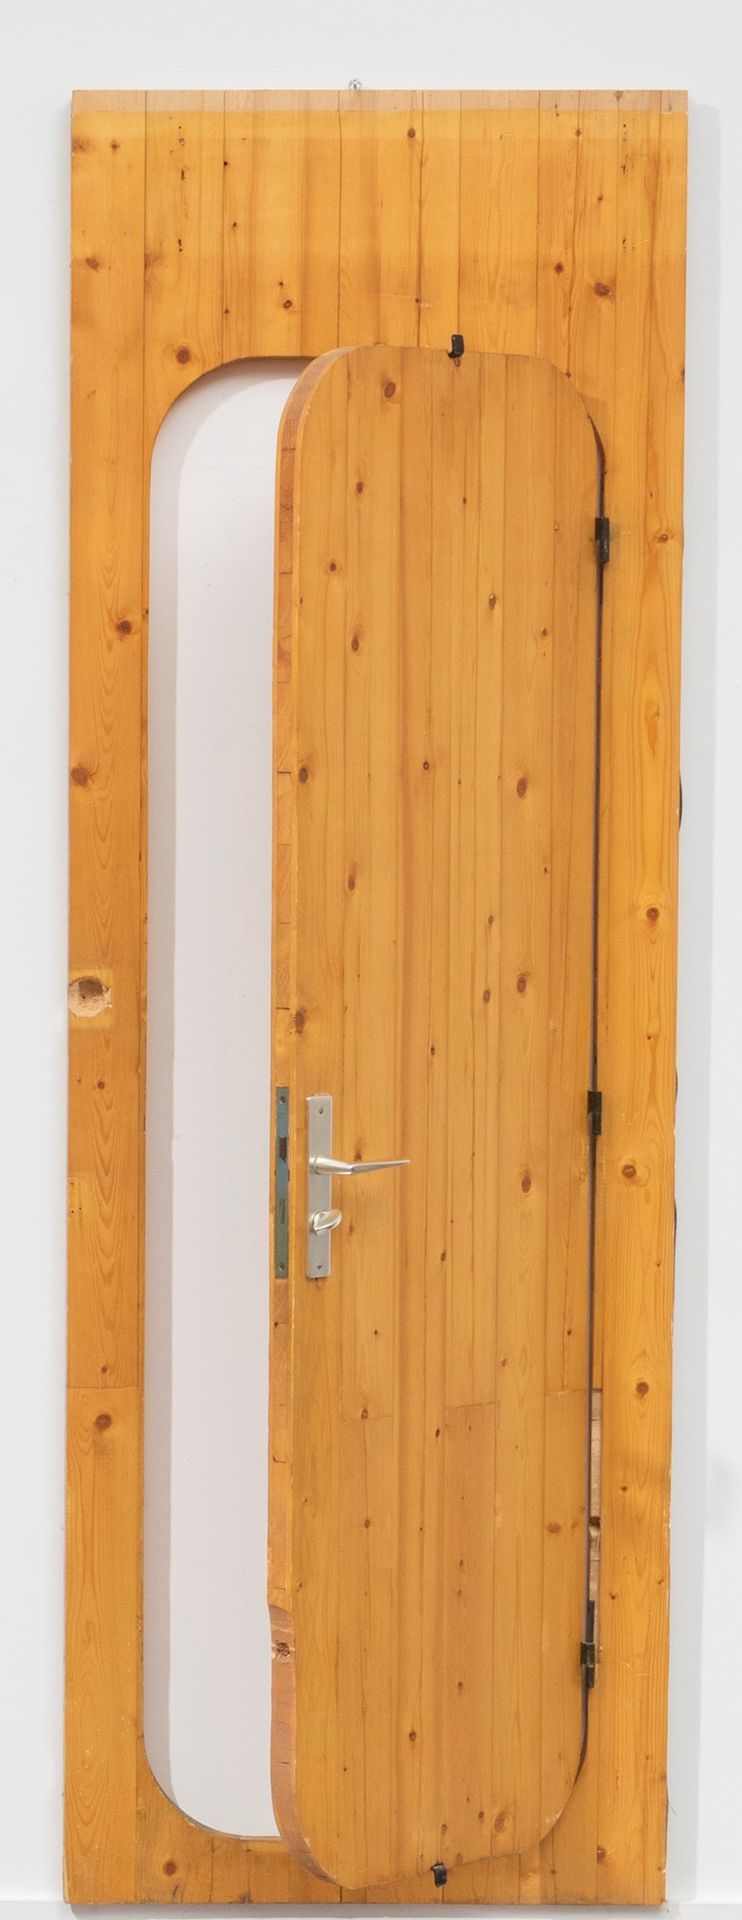 Charlotte PERRIAND (1903-1999) Door and its frame
Pine.
Grote deur
Den.
1974.
H.&hellip;